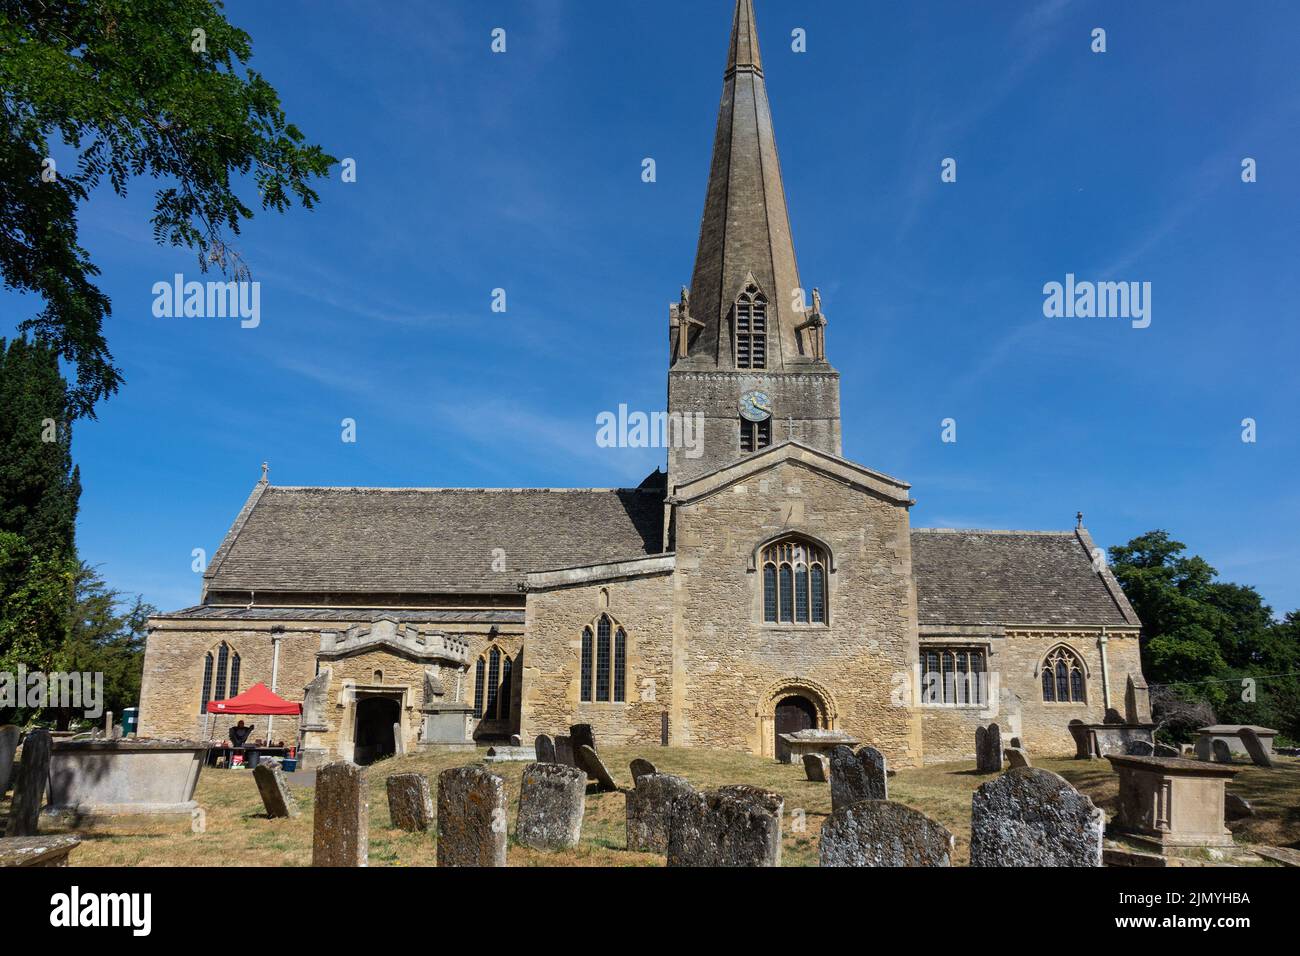 Inglaterra, Oxfordshire, iglesia de Bampton Foto de stock